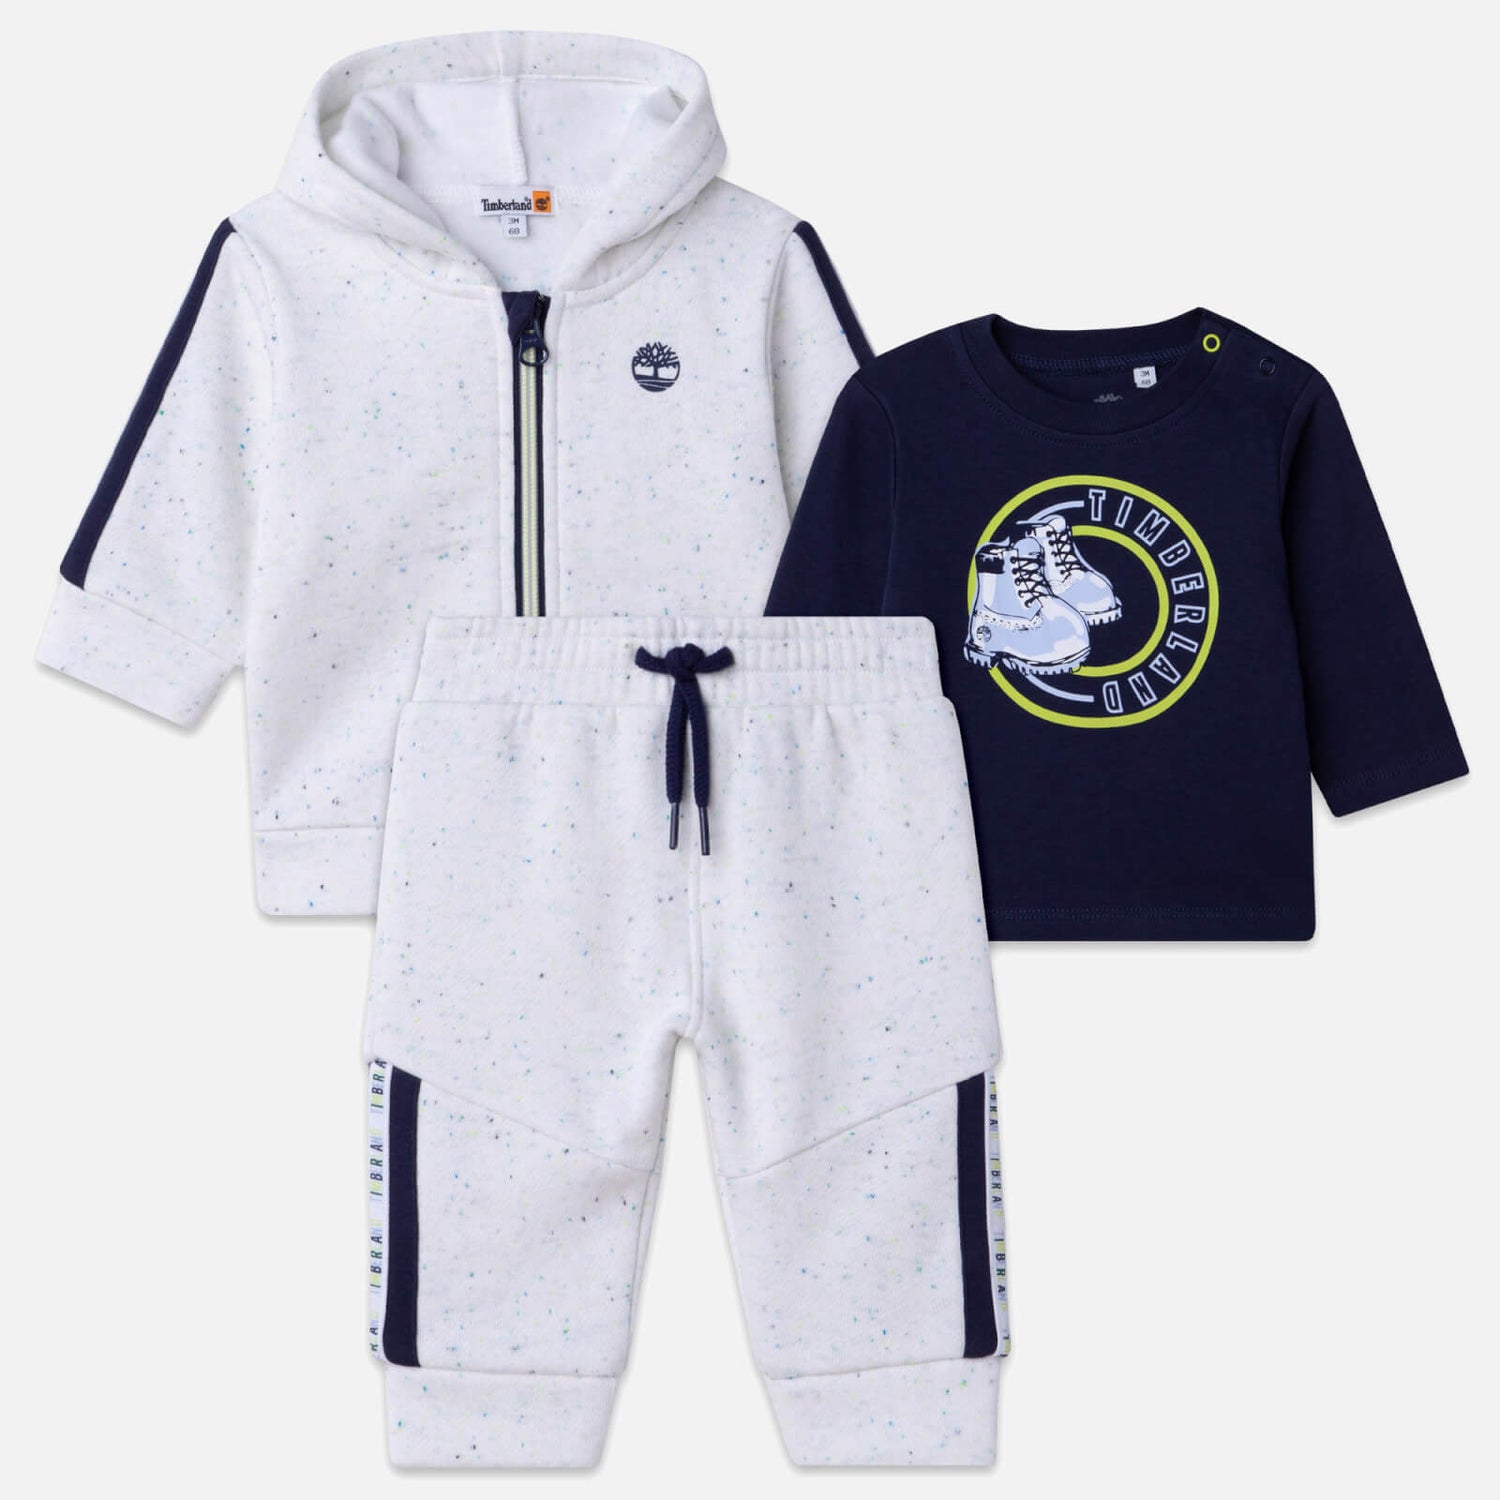 Timberland Babies’ Cotton-Blend Jersey Hoodie, T-Shirt and Jogging Bottoms Set